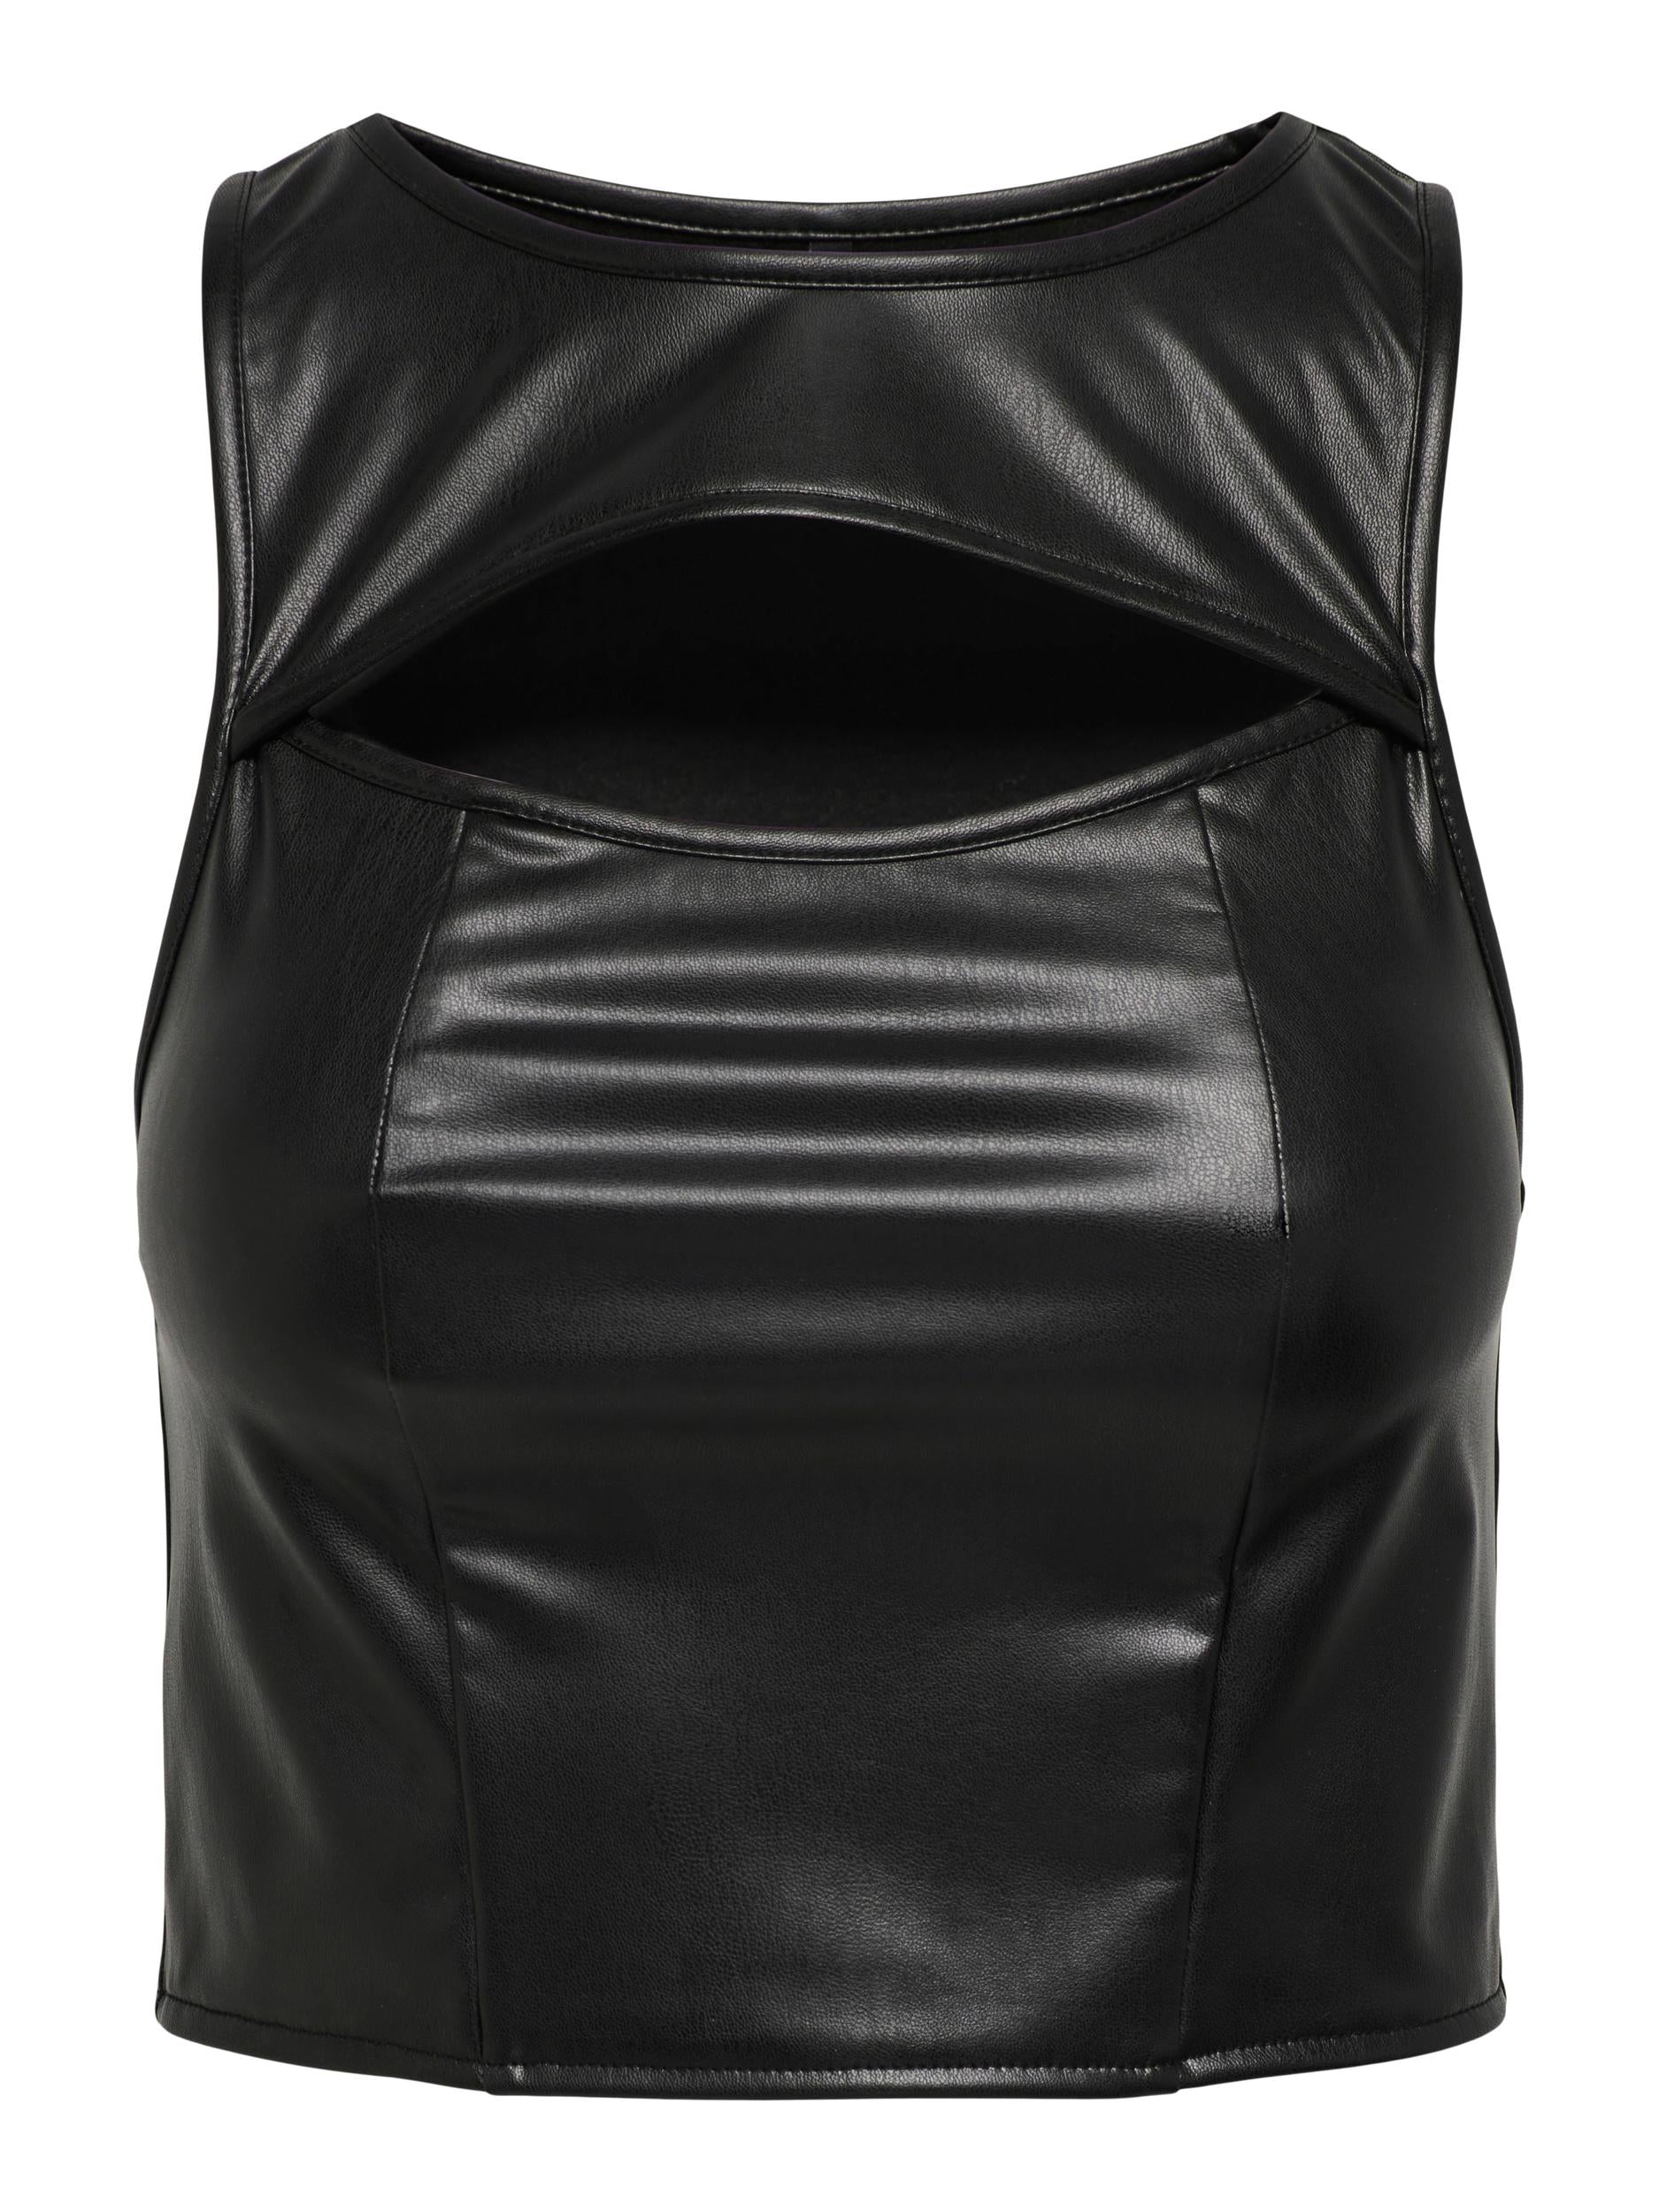 Ladies Dorit Faux Leather Cropped Top-Black-Front View